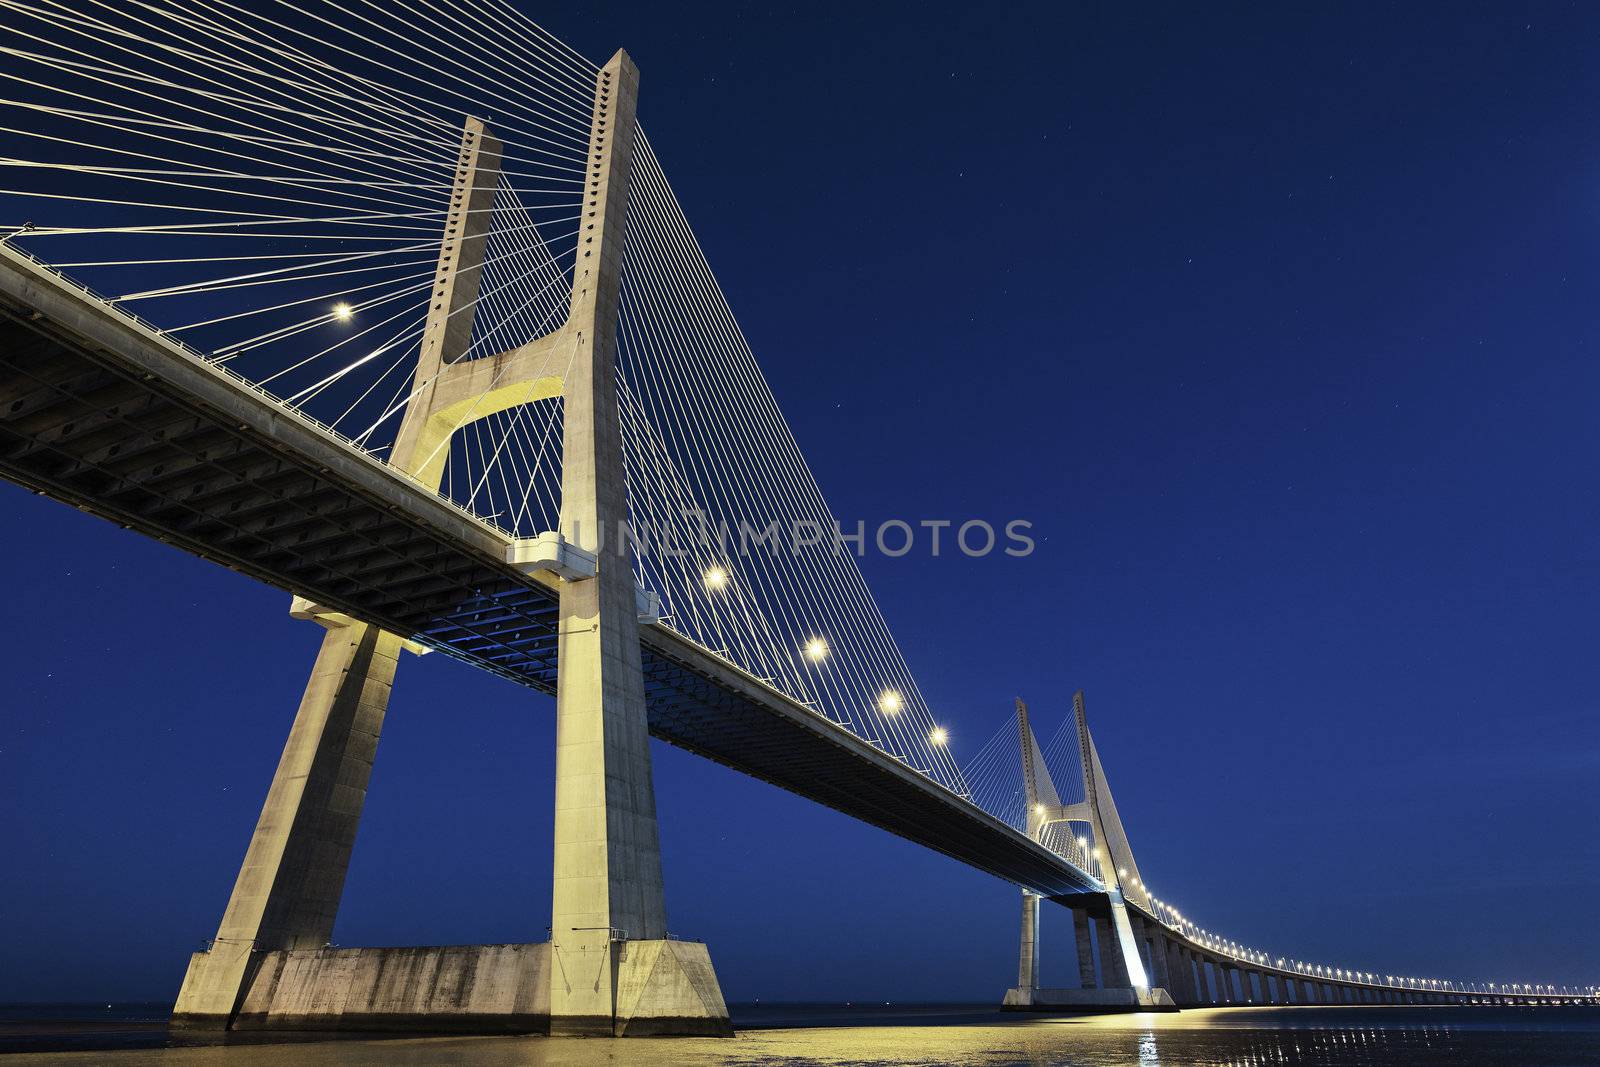 Vasco da Gama bridge by night by vwalakte